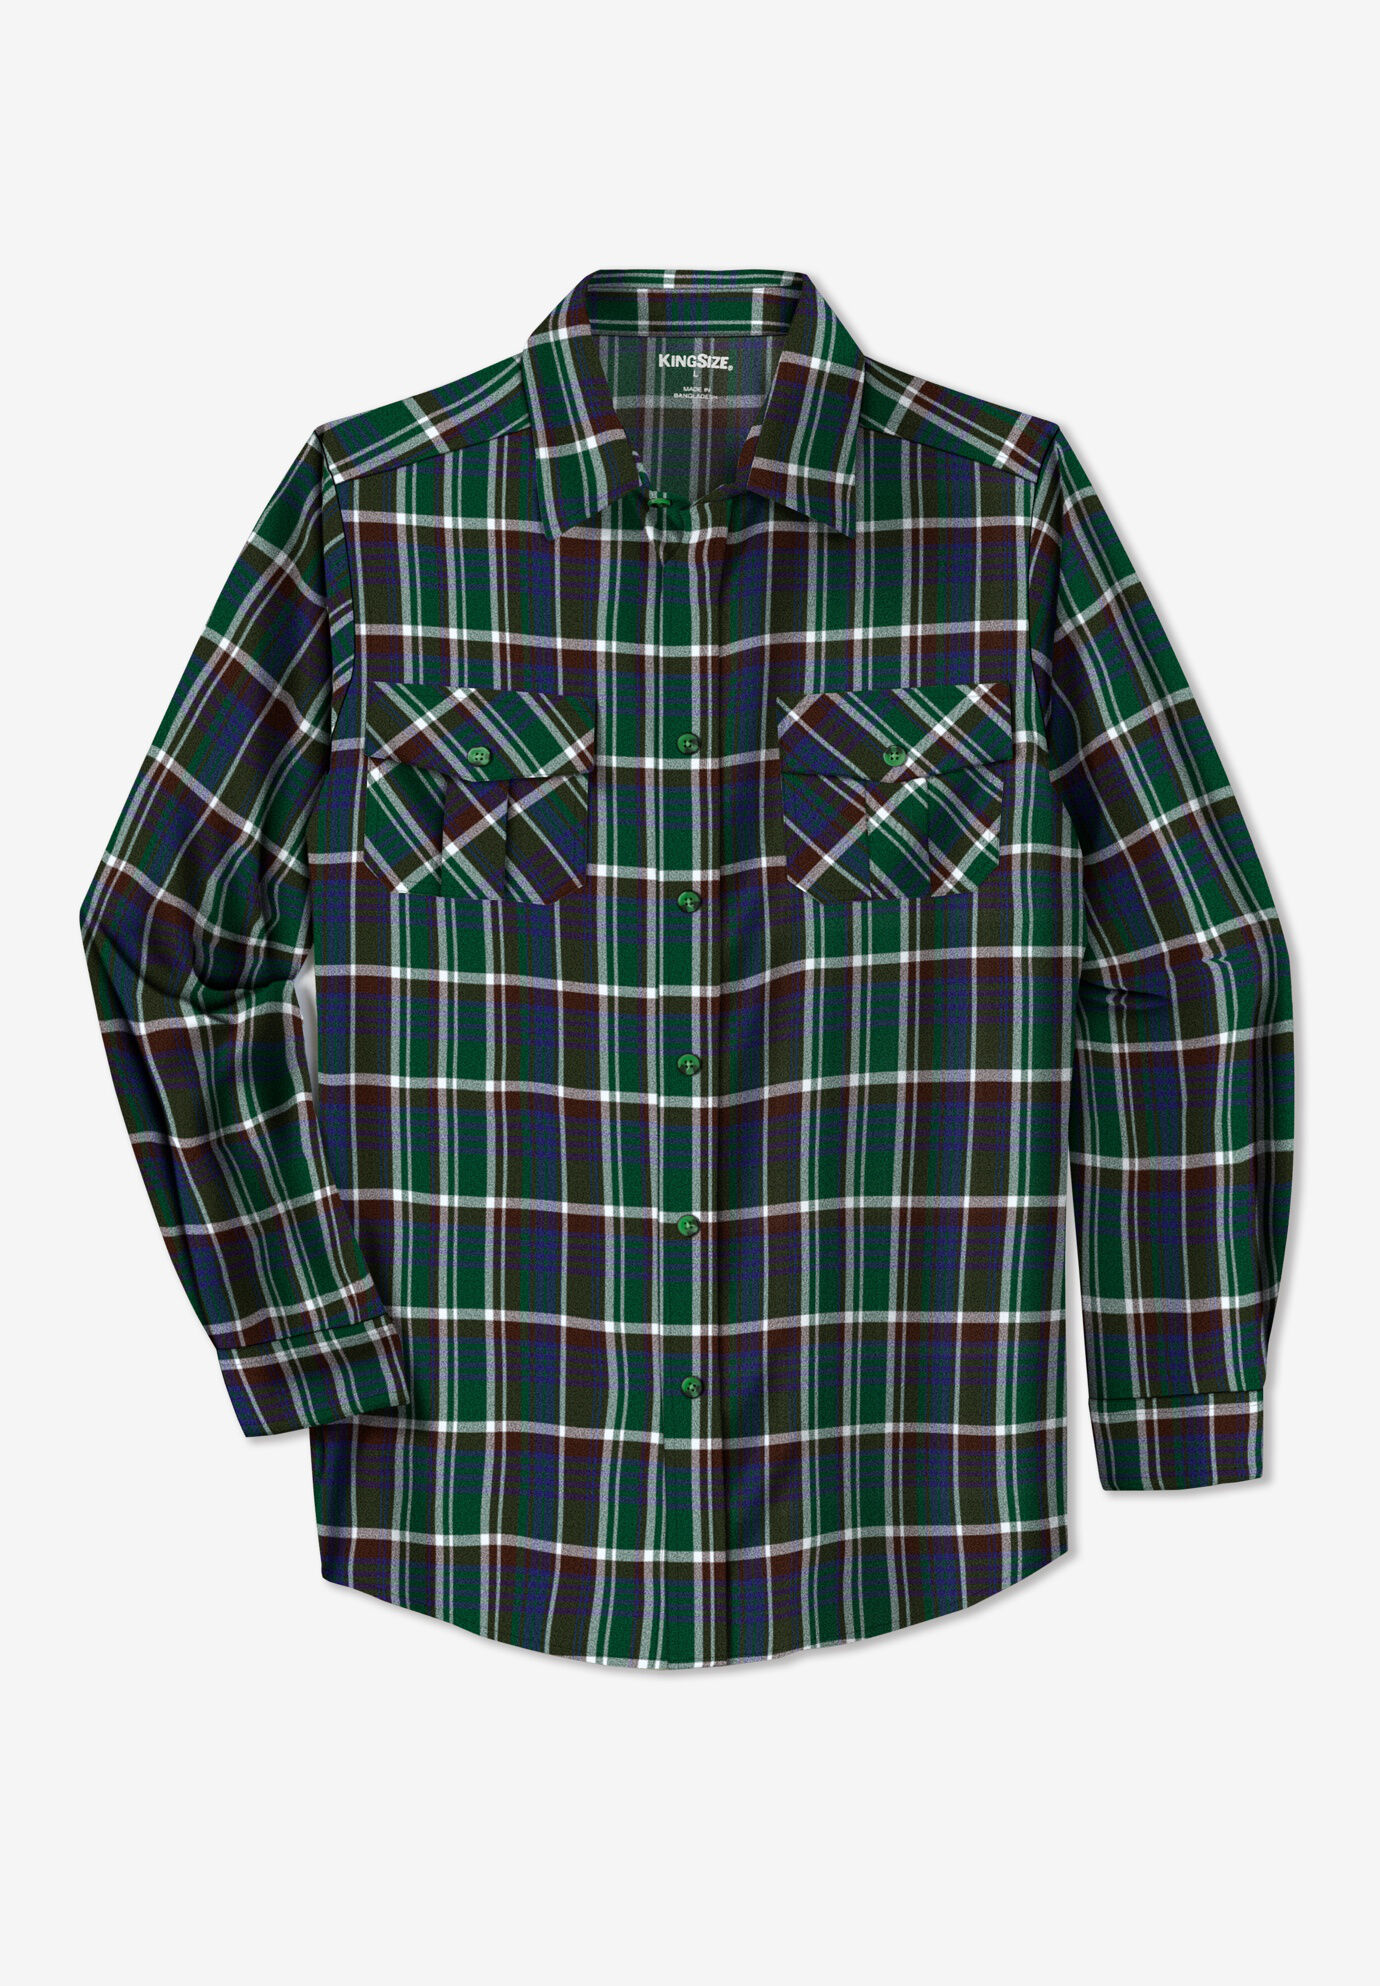 5xl flannel shirt